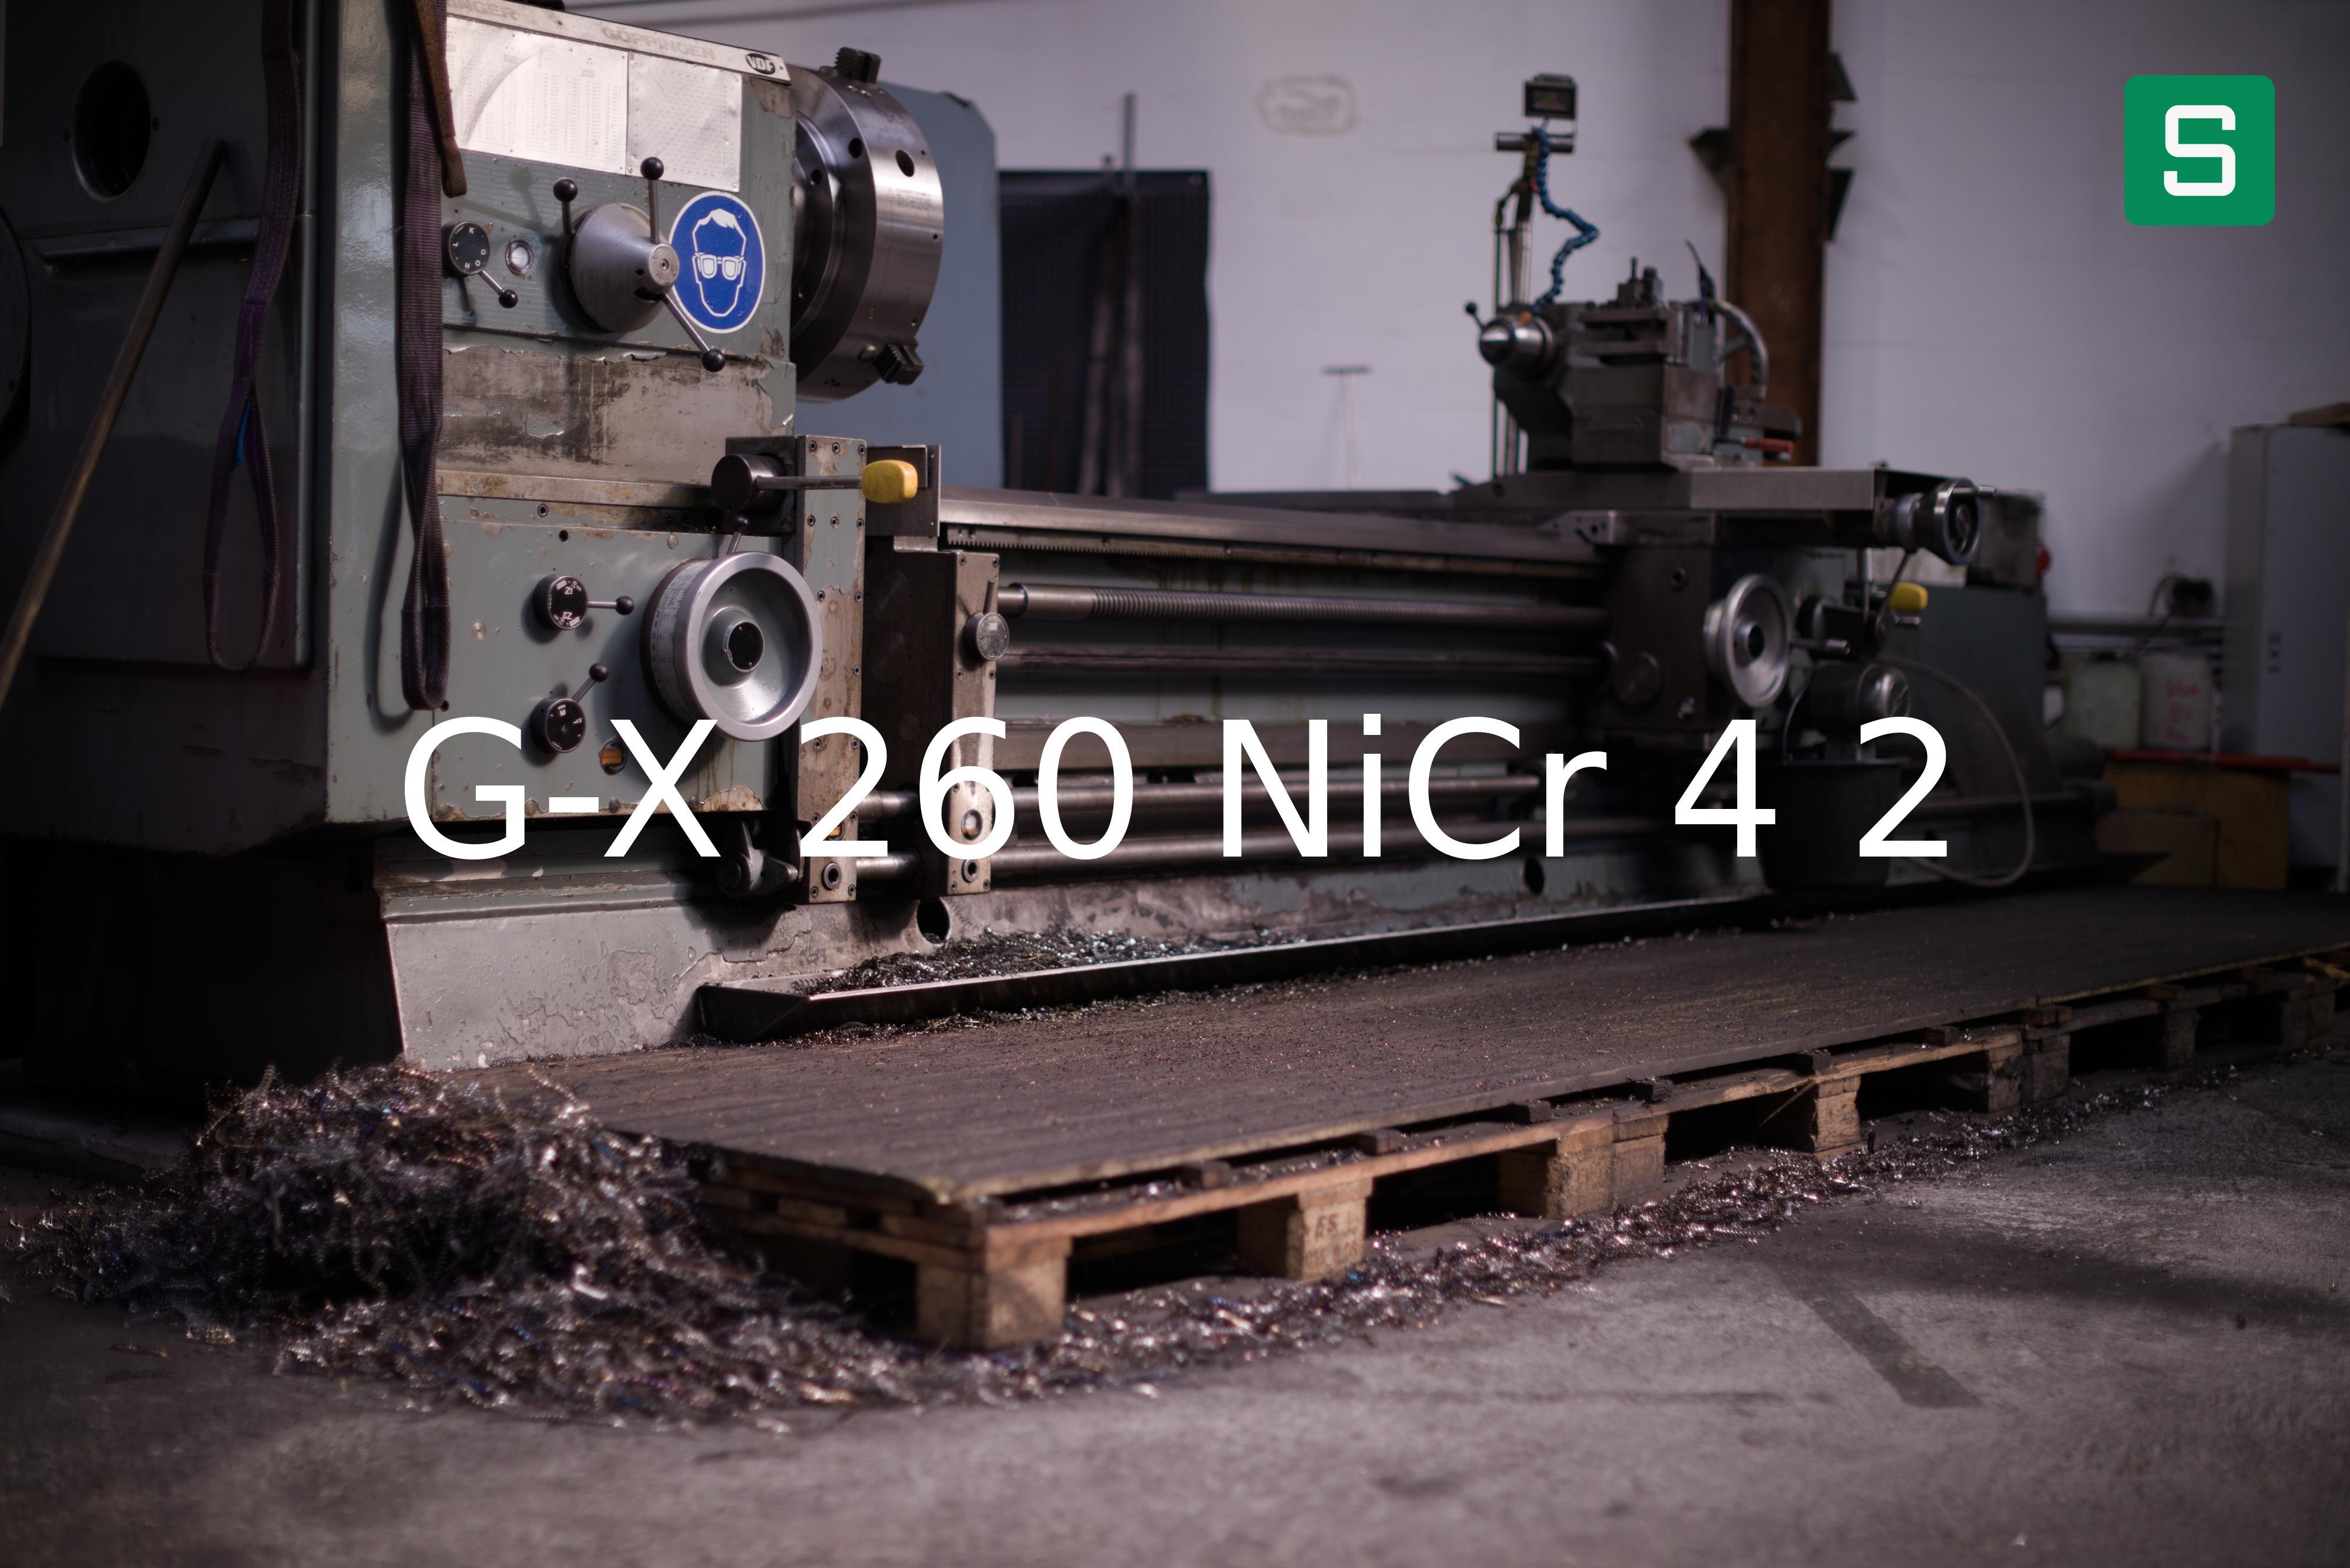 Steel Material: G-X 260 NiCr 4 2